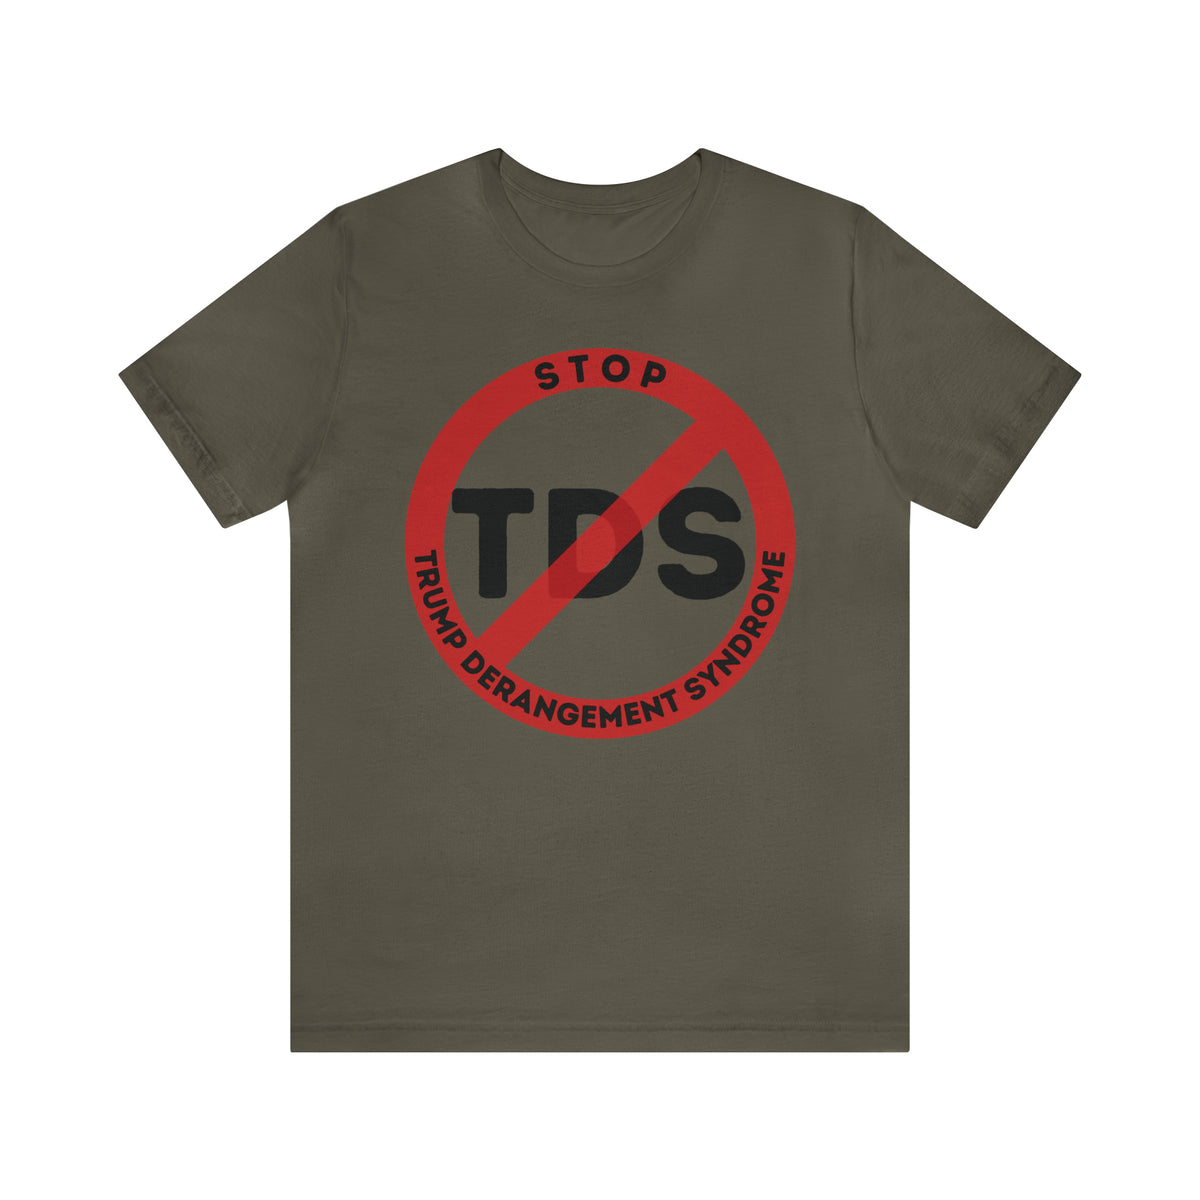 STOP Trump Derangement SyndromeT-Shirt